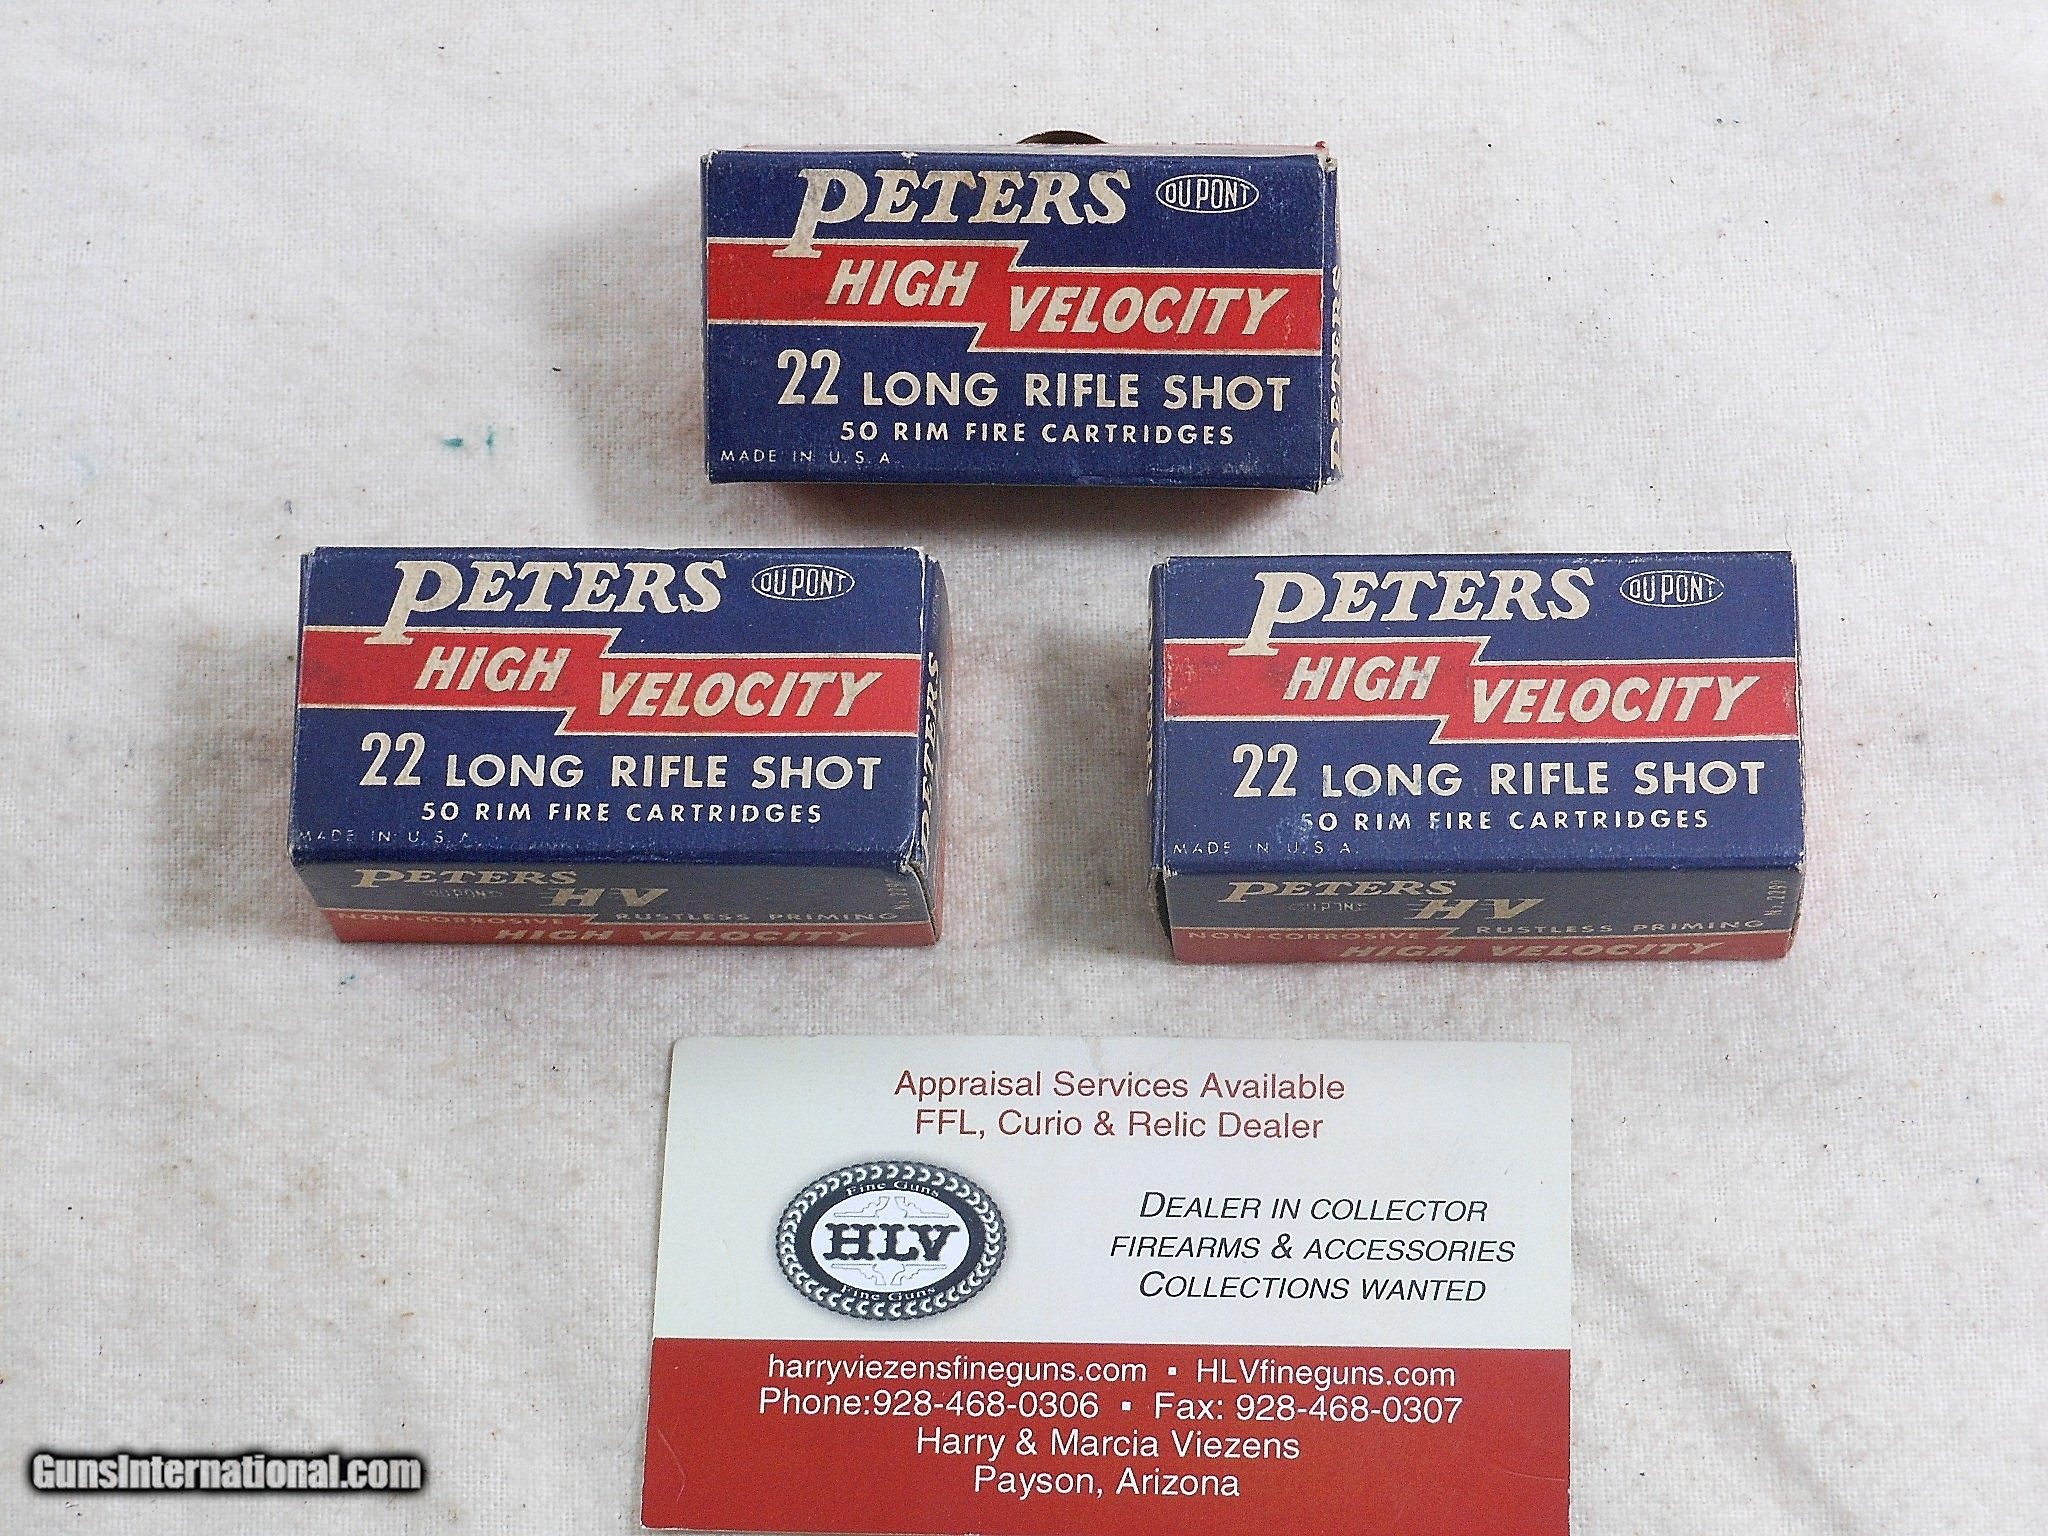 Peters Cartridge Co. High Velocity 22 Long Rifle Shot Shells